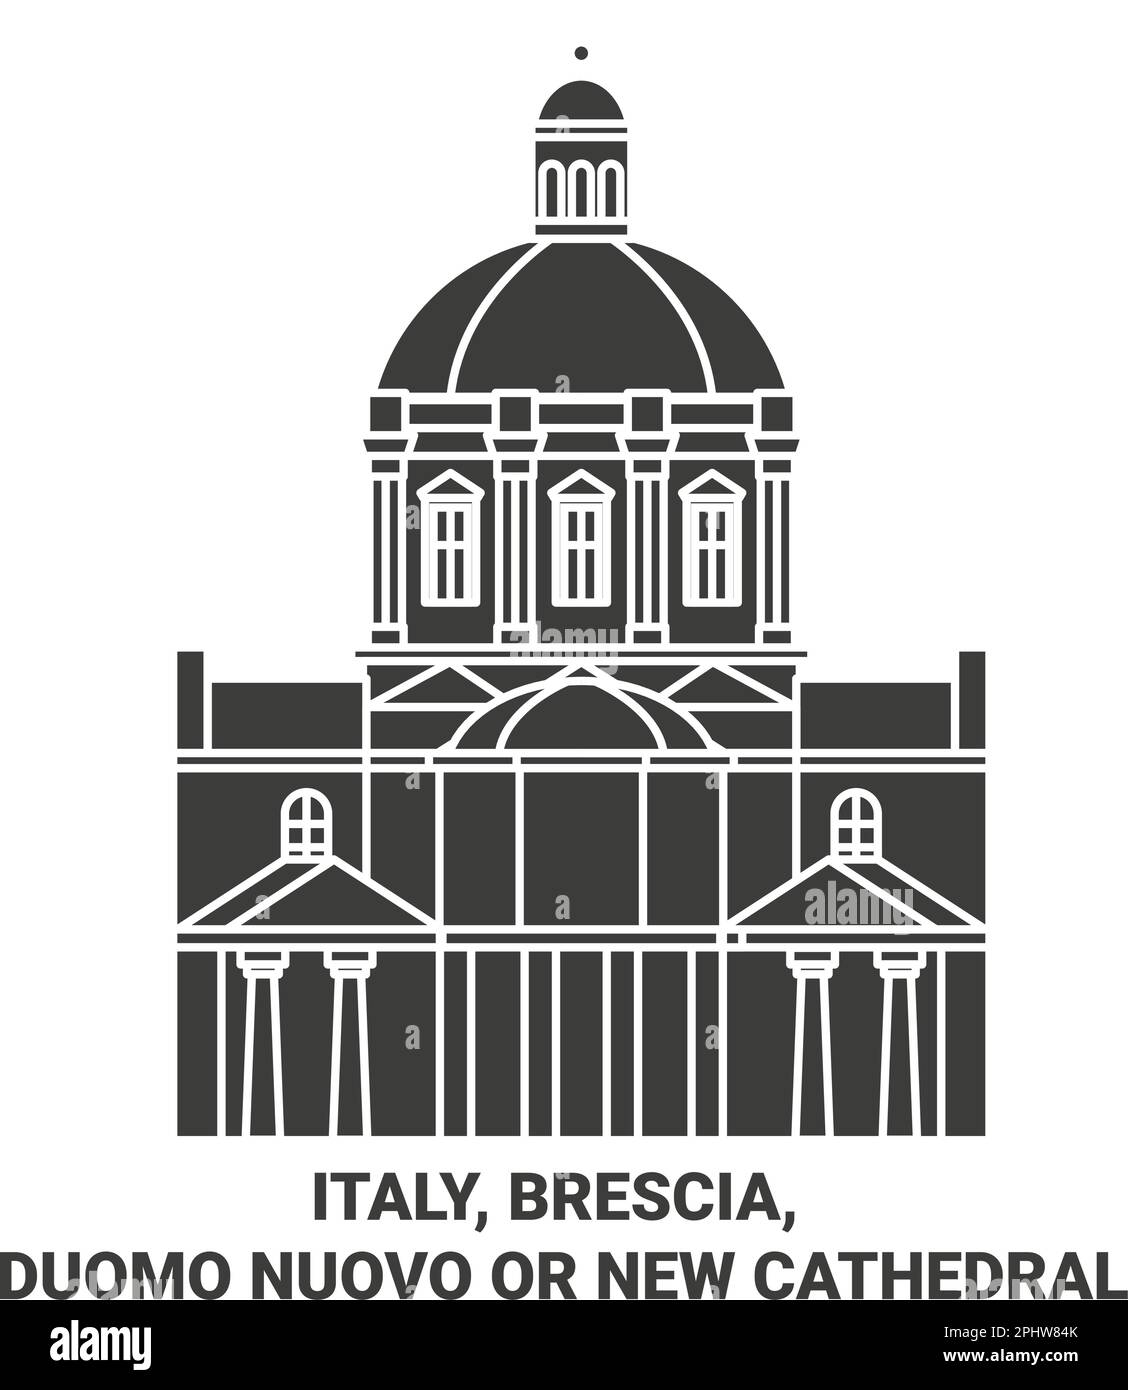 Italy, Brescia, Duomo Nuovo Or New Cathedral travel landmark vector illustration Stock Vector